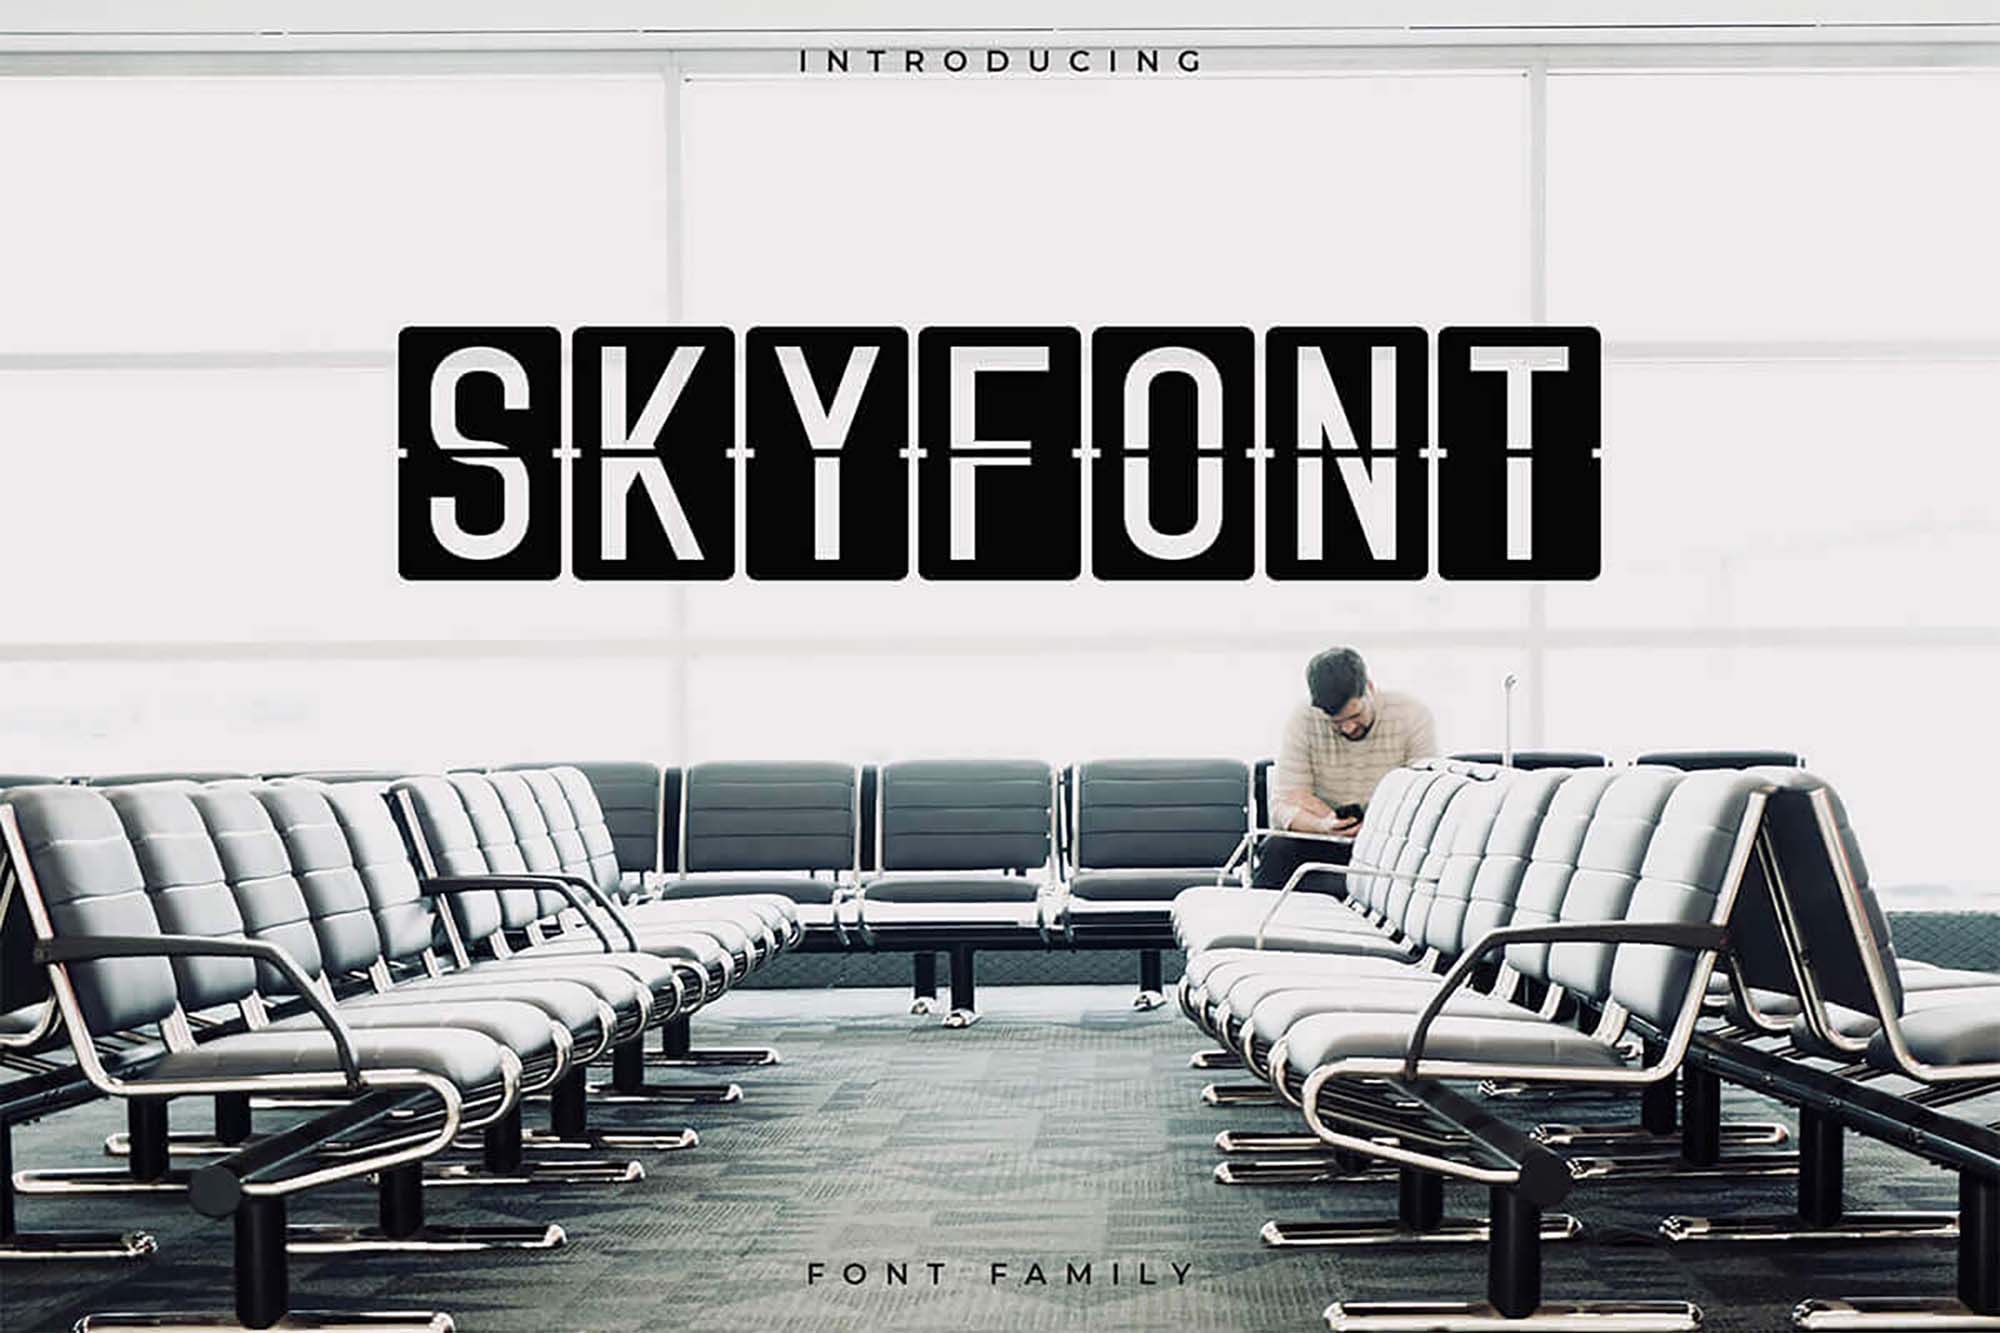 Skyfont Sans Serif Font